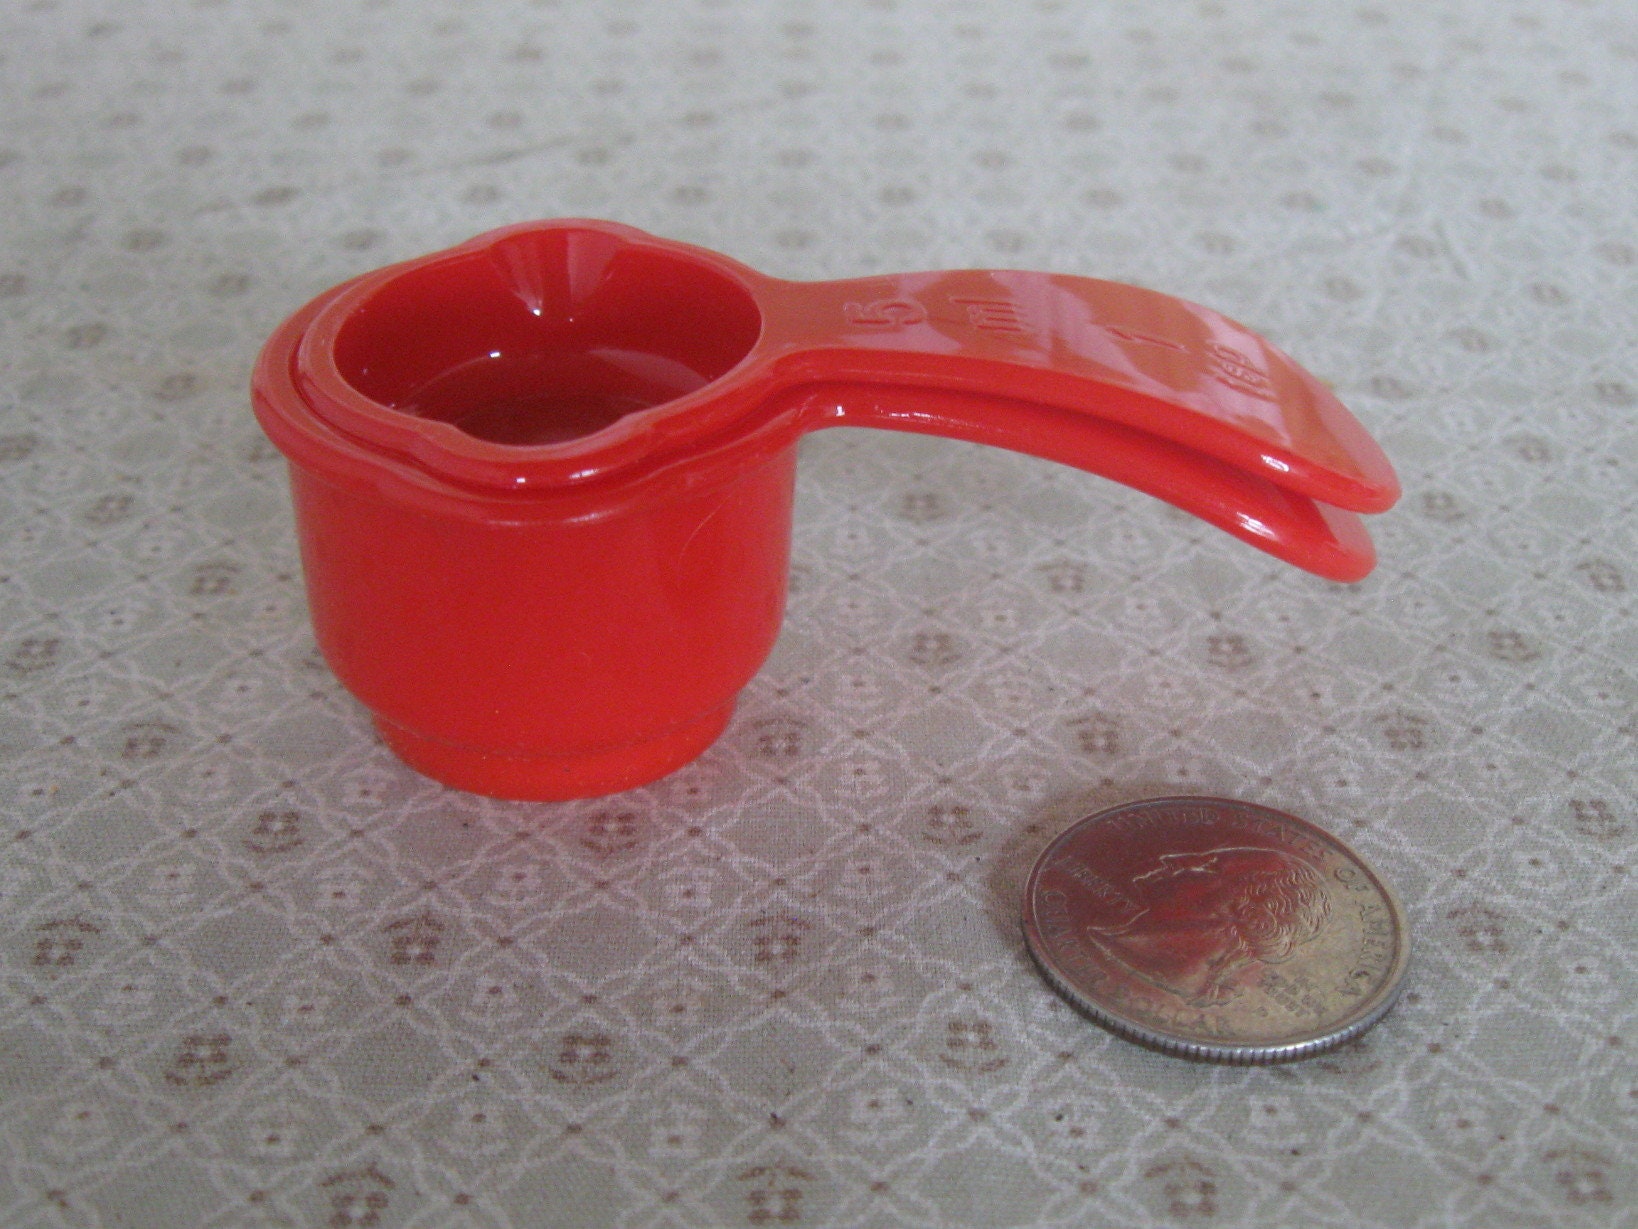 TUPPERWARE MEASURING CUPS MAGNETS Tiny Treasures Magnet Teaspoon Tablespoon  BLUE